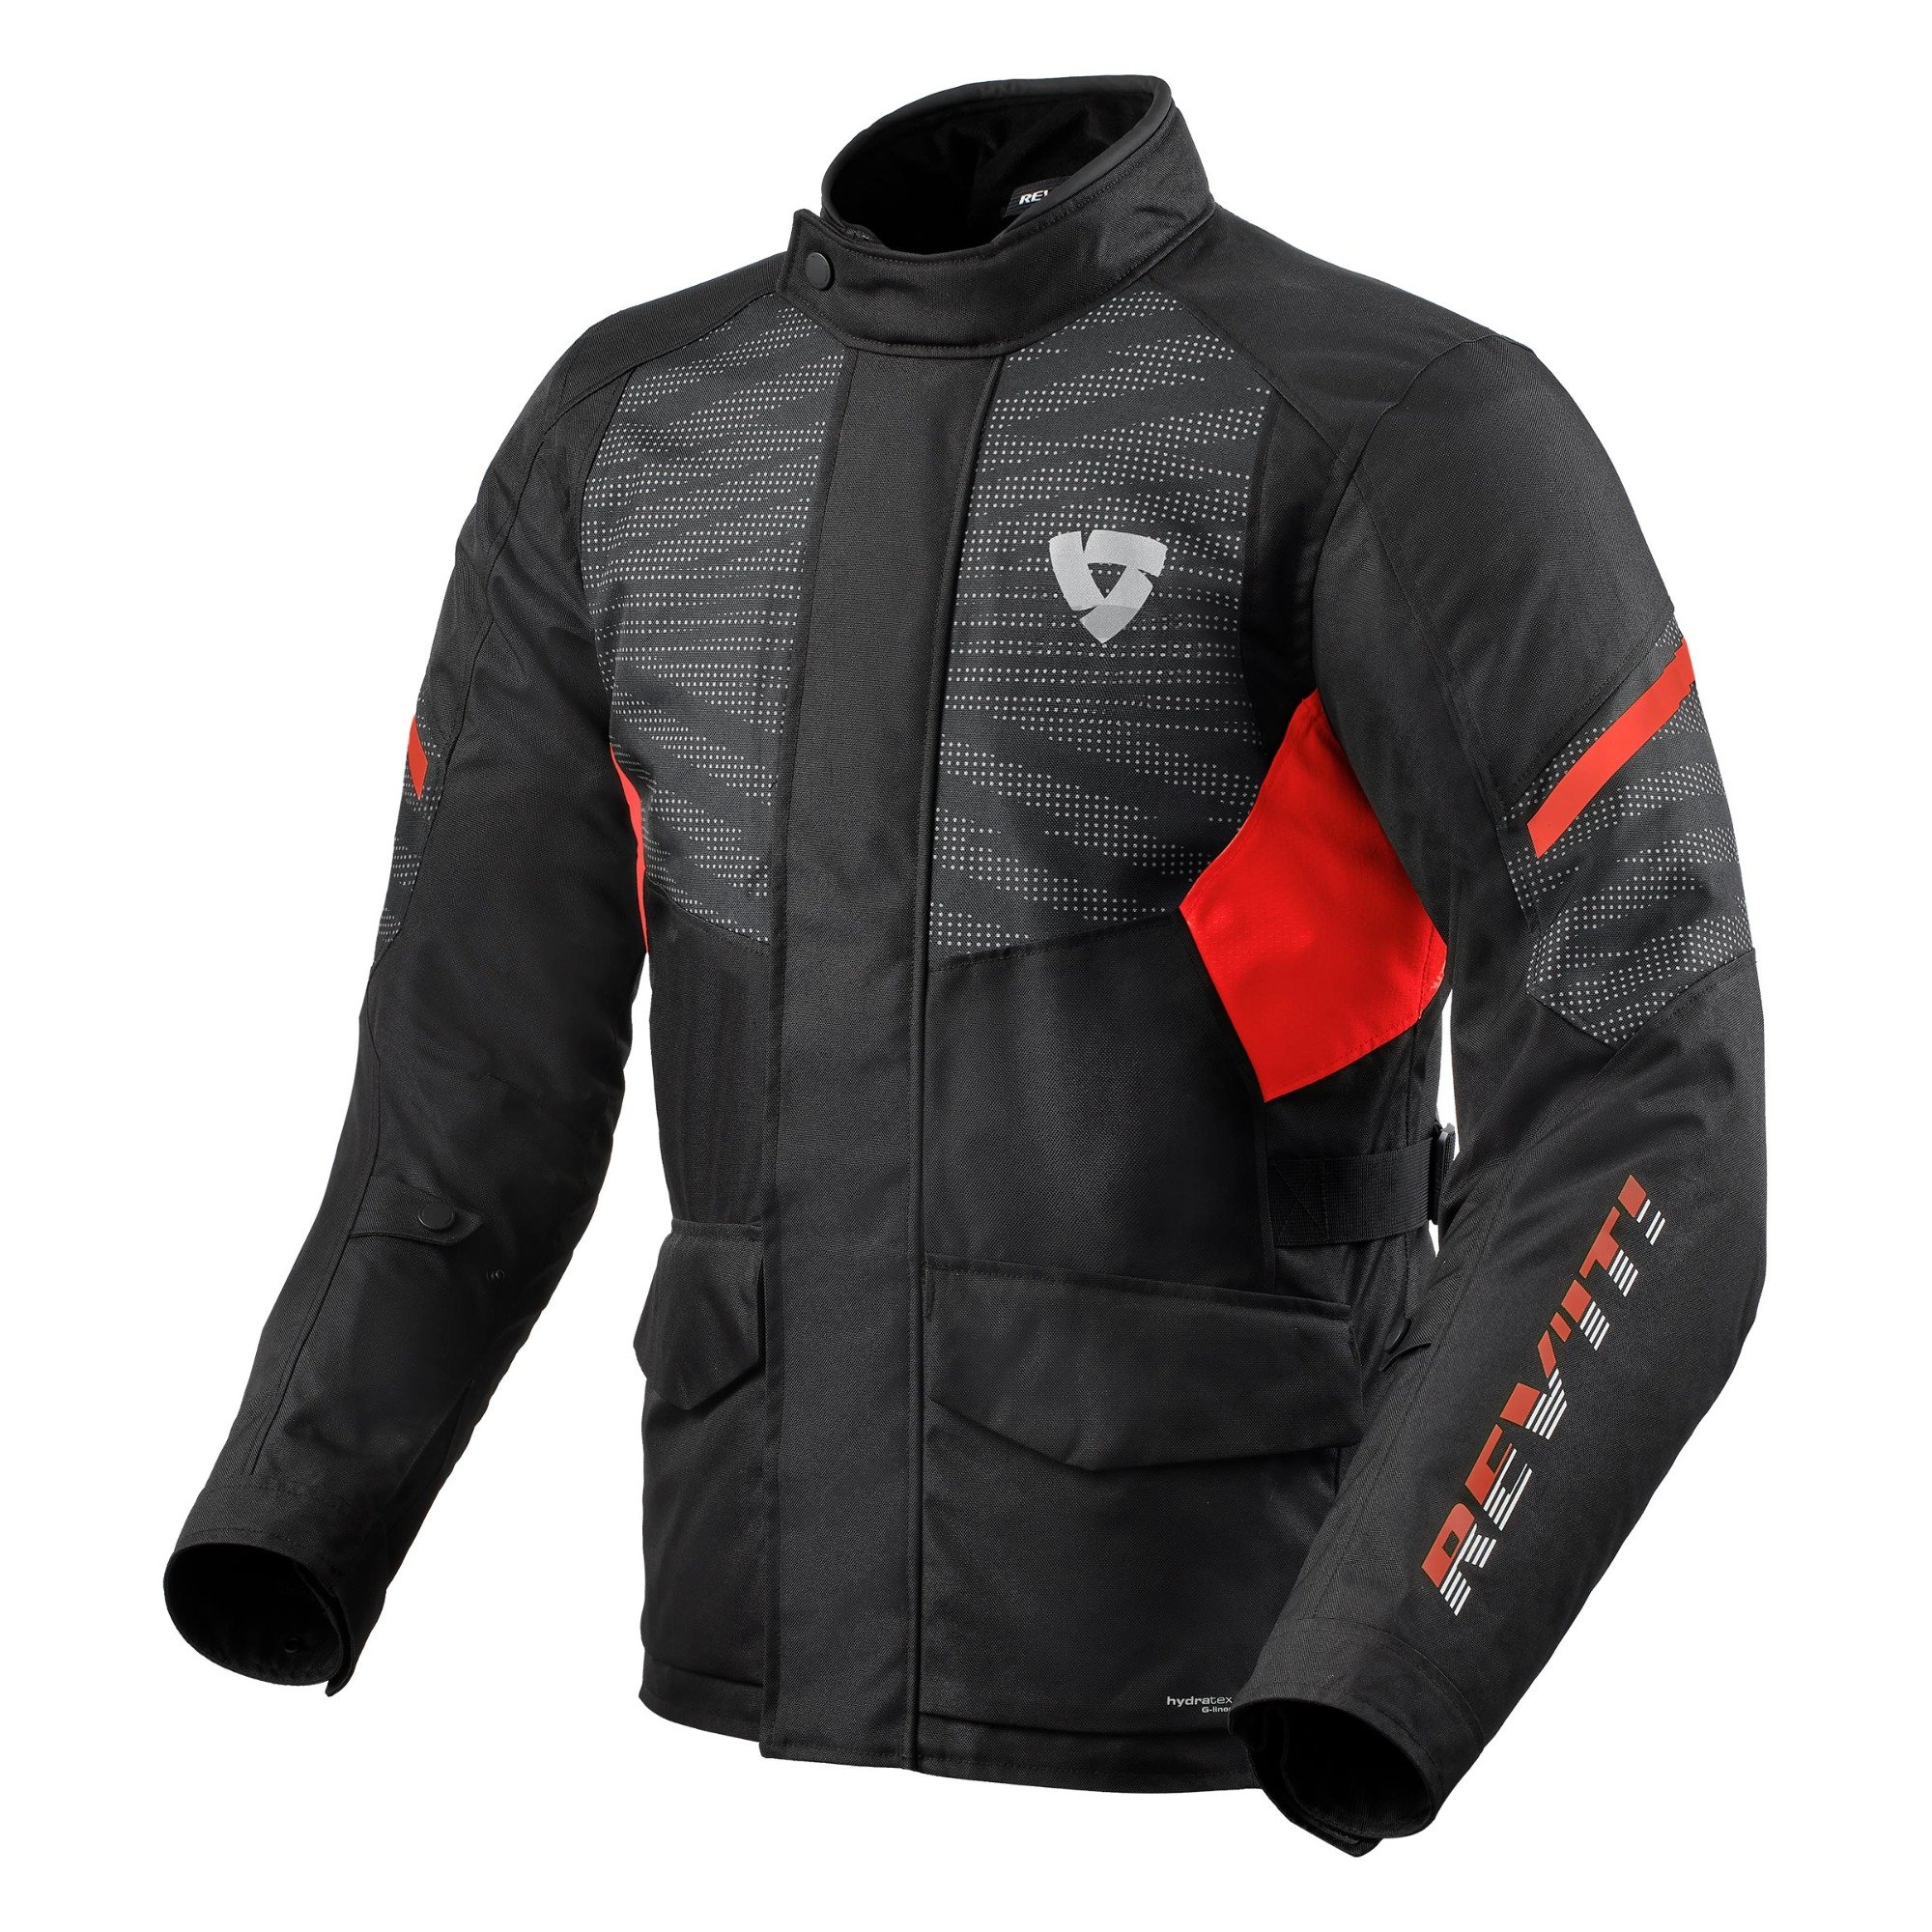 Image of REV'IT! Duke H2O Jacket Black Red Size L ID 8700001332040